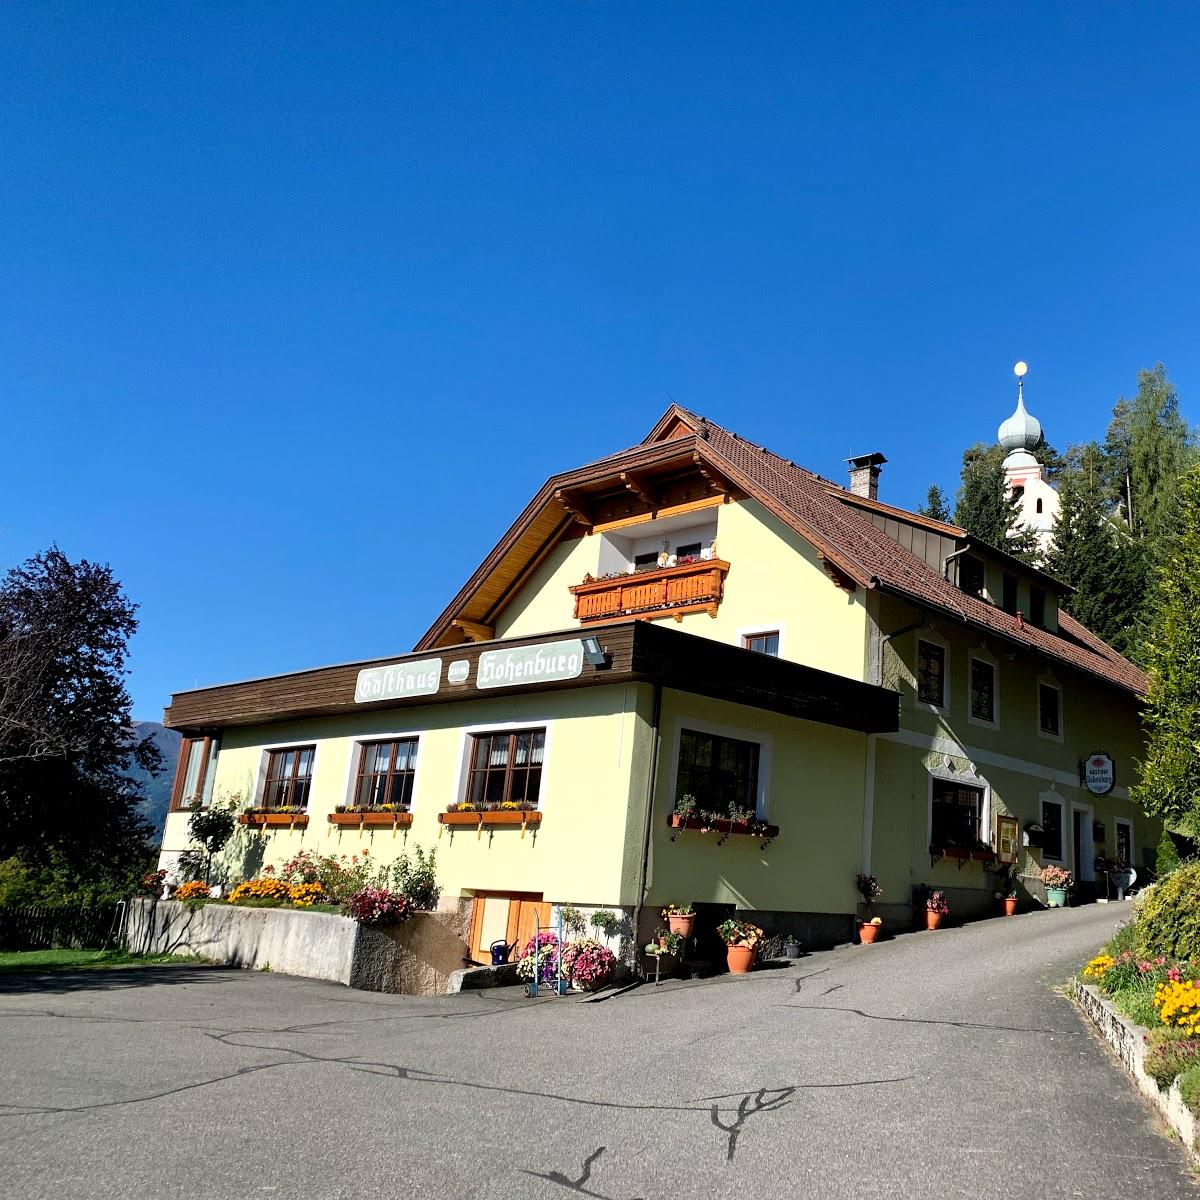 Restaurant "Hohenburg" in Lendorf